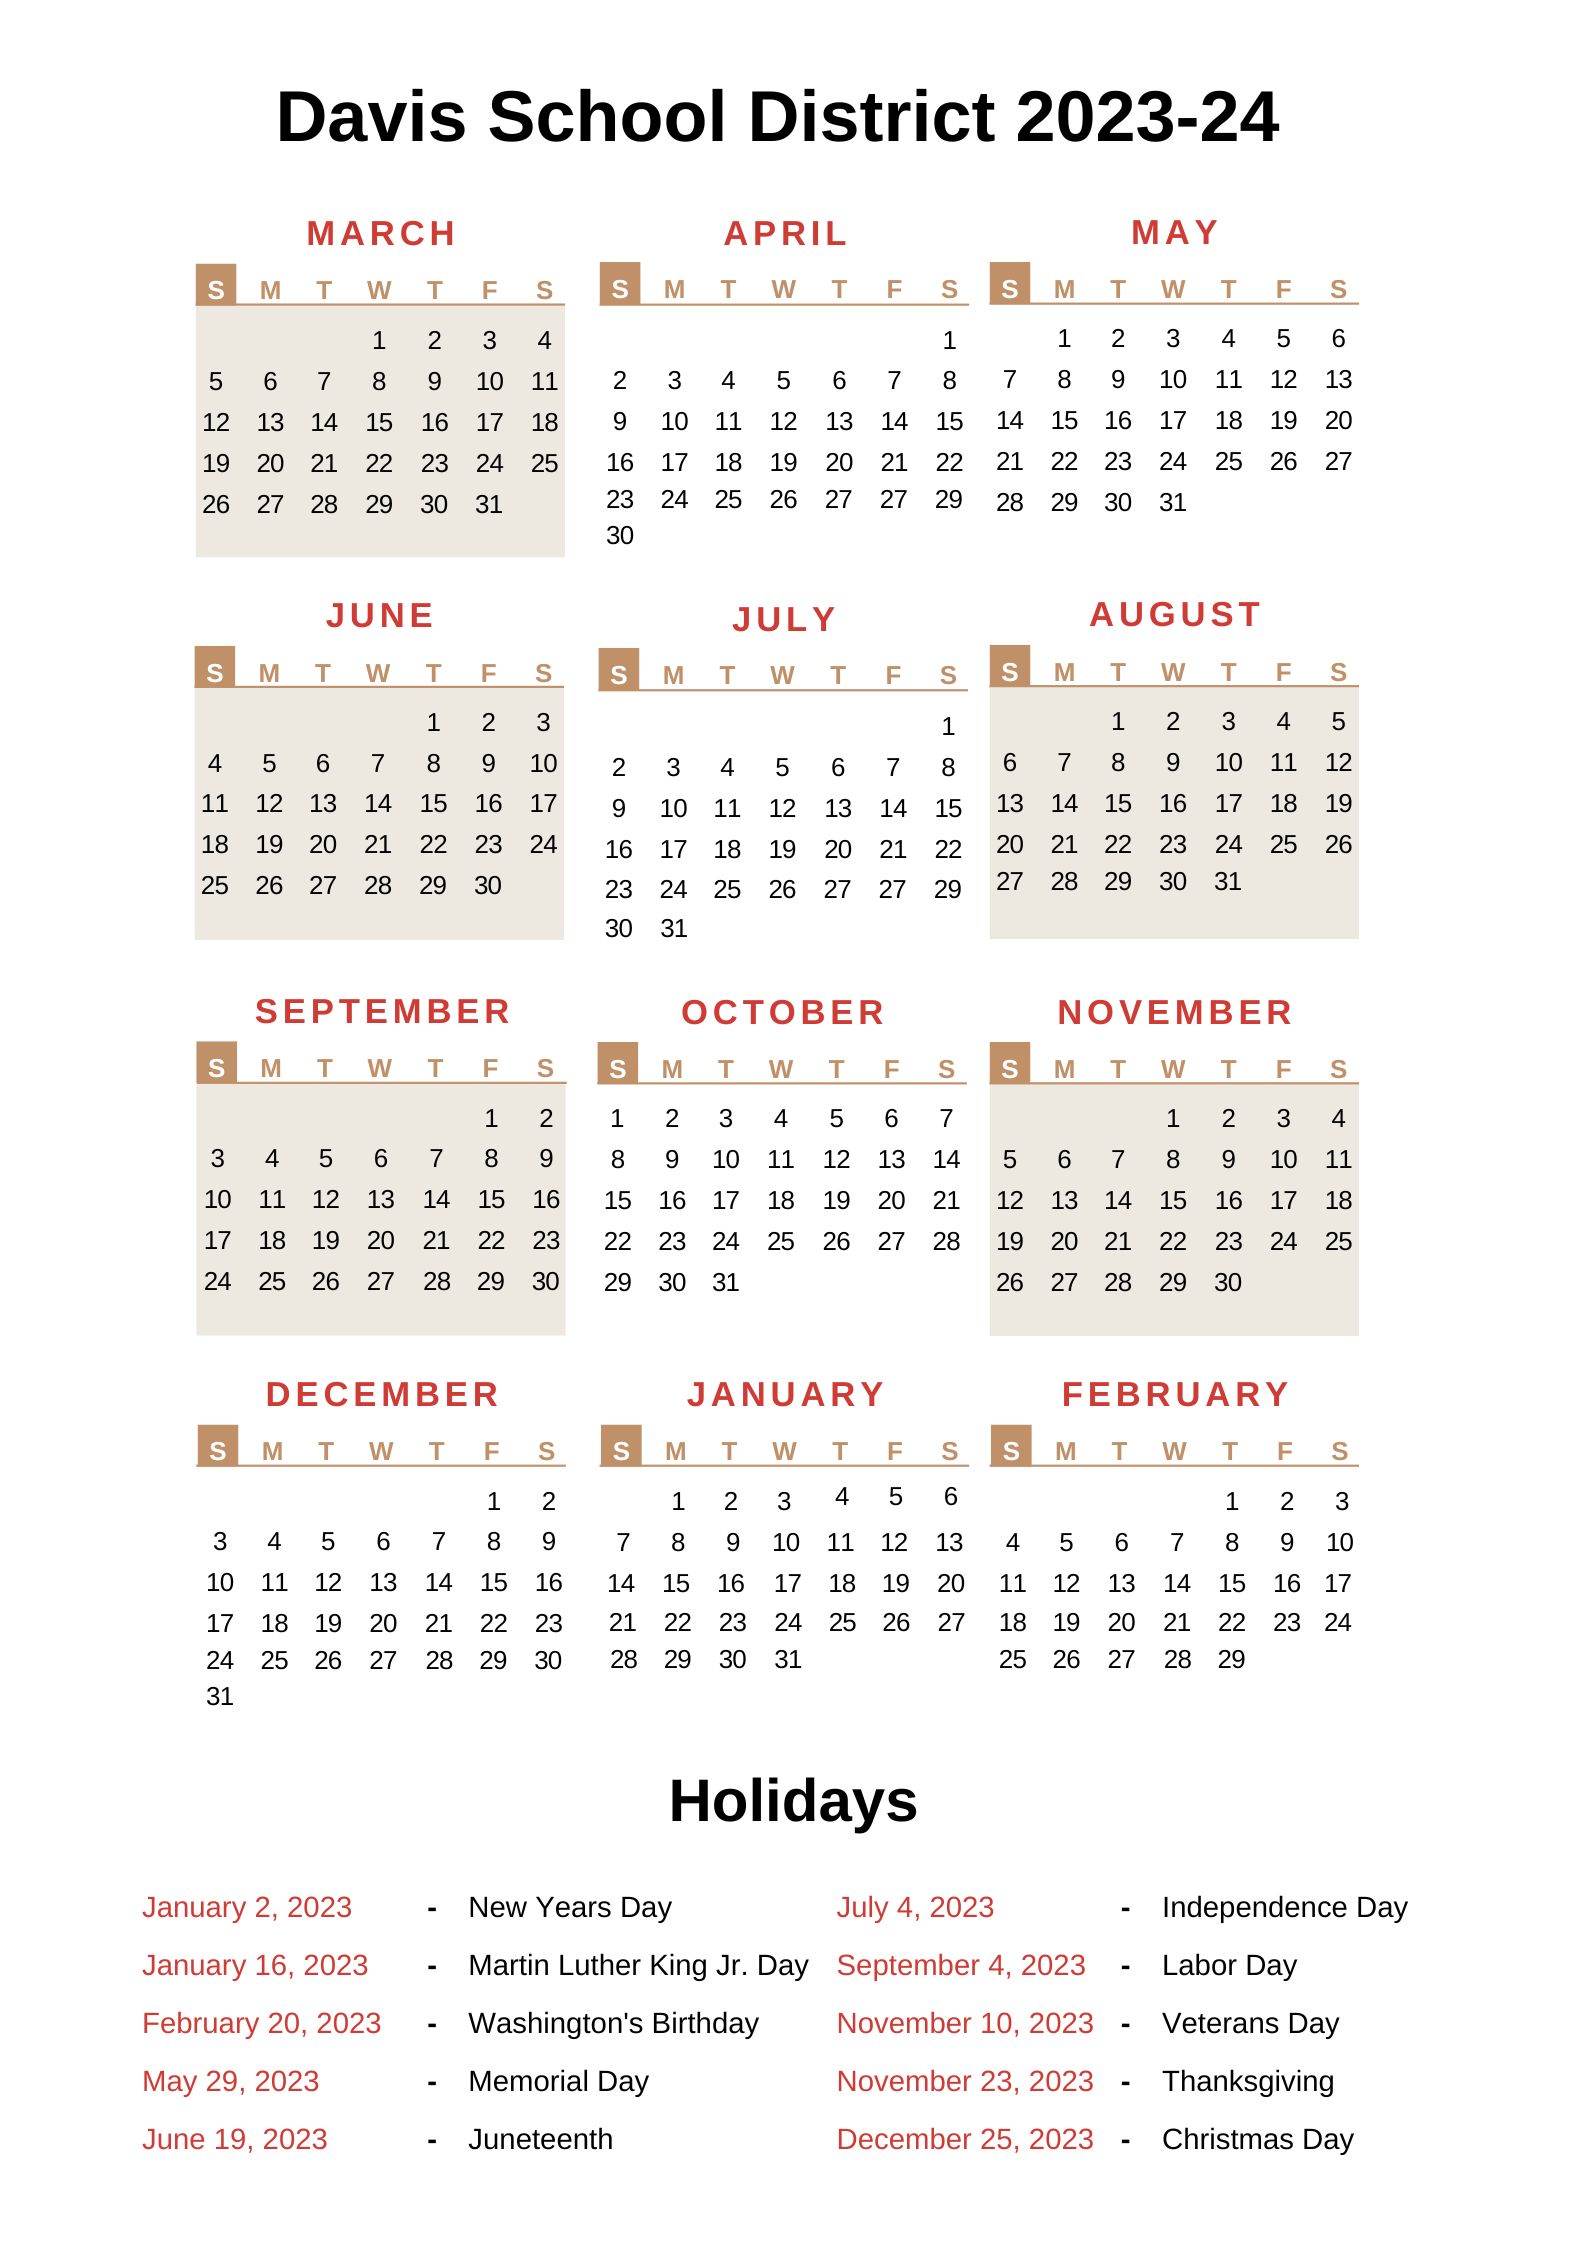 Davis School District Calendar with Holidays 2022 2023